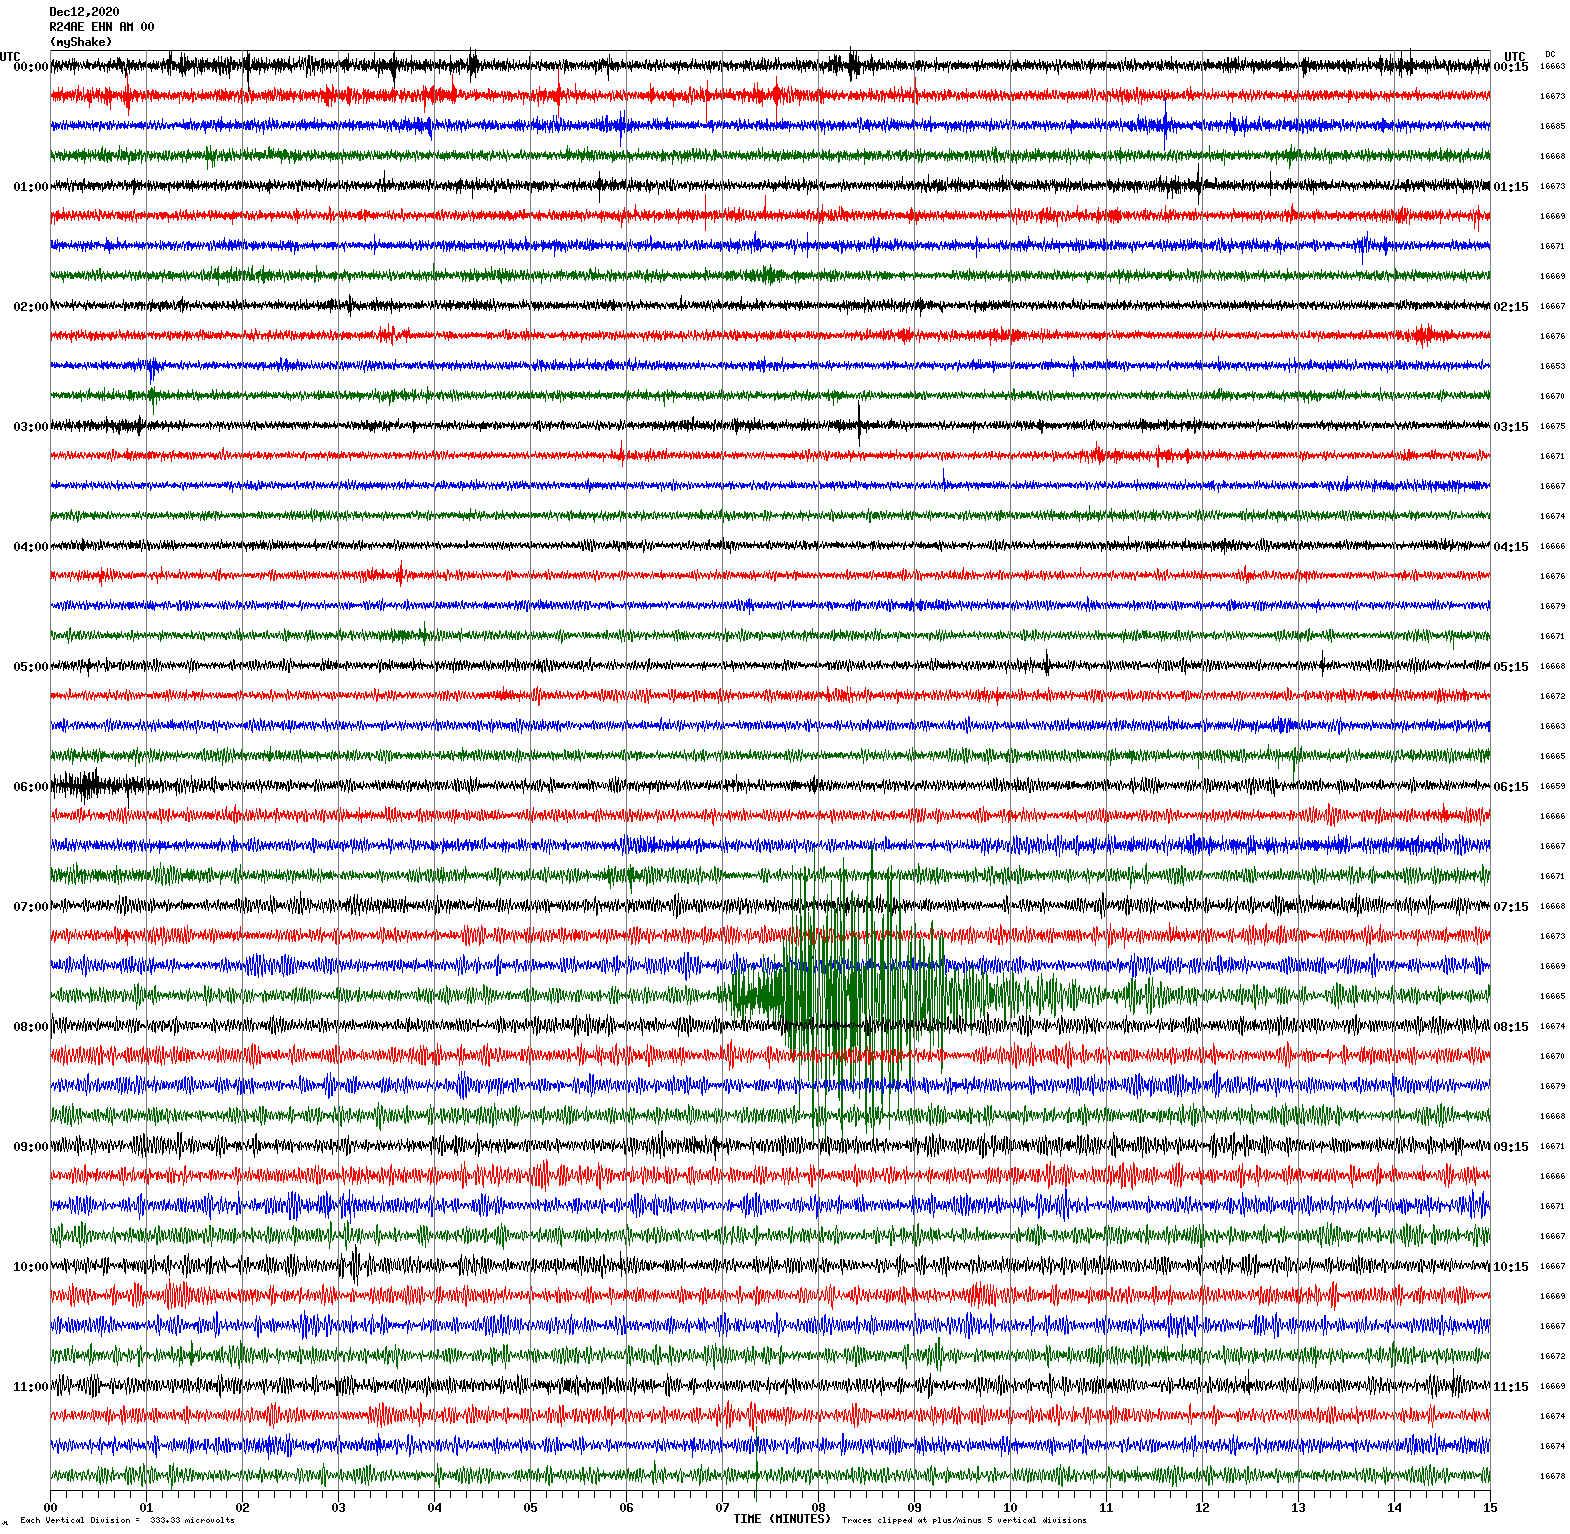 /seismic-data/R24AE/R24AE_EHN_AM_00.2020121200.gif